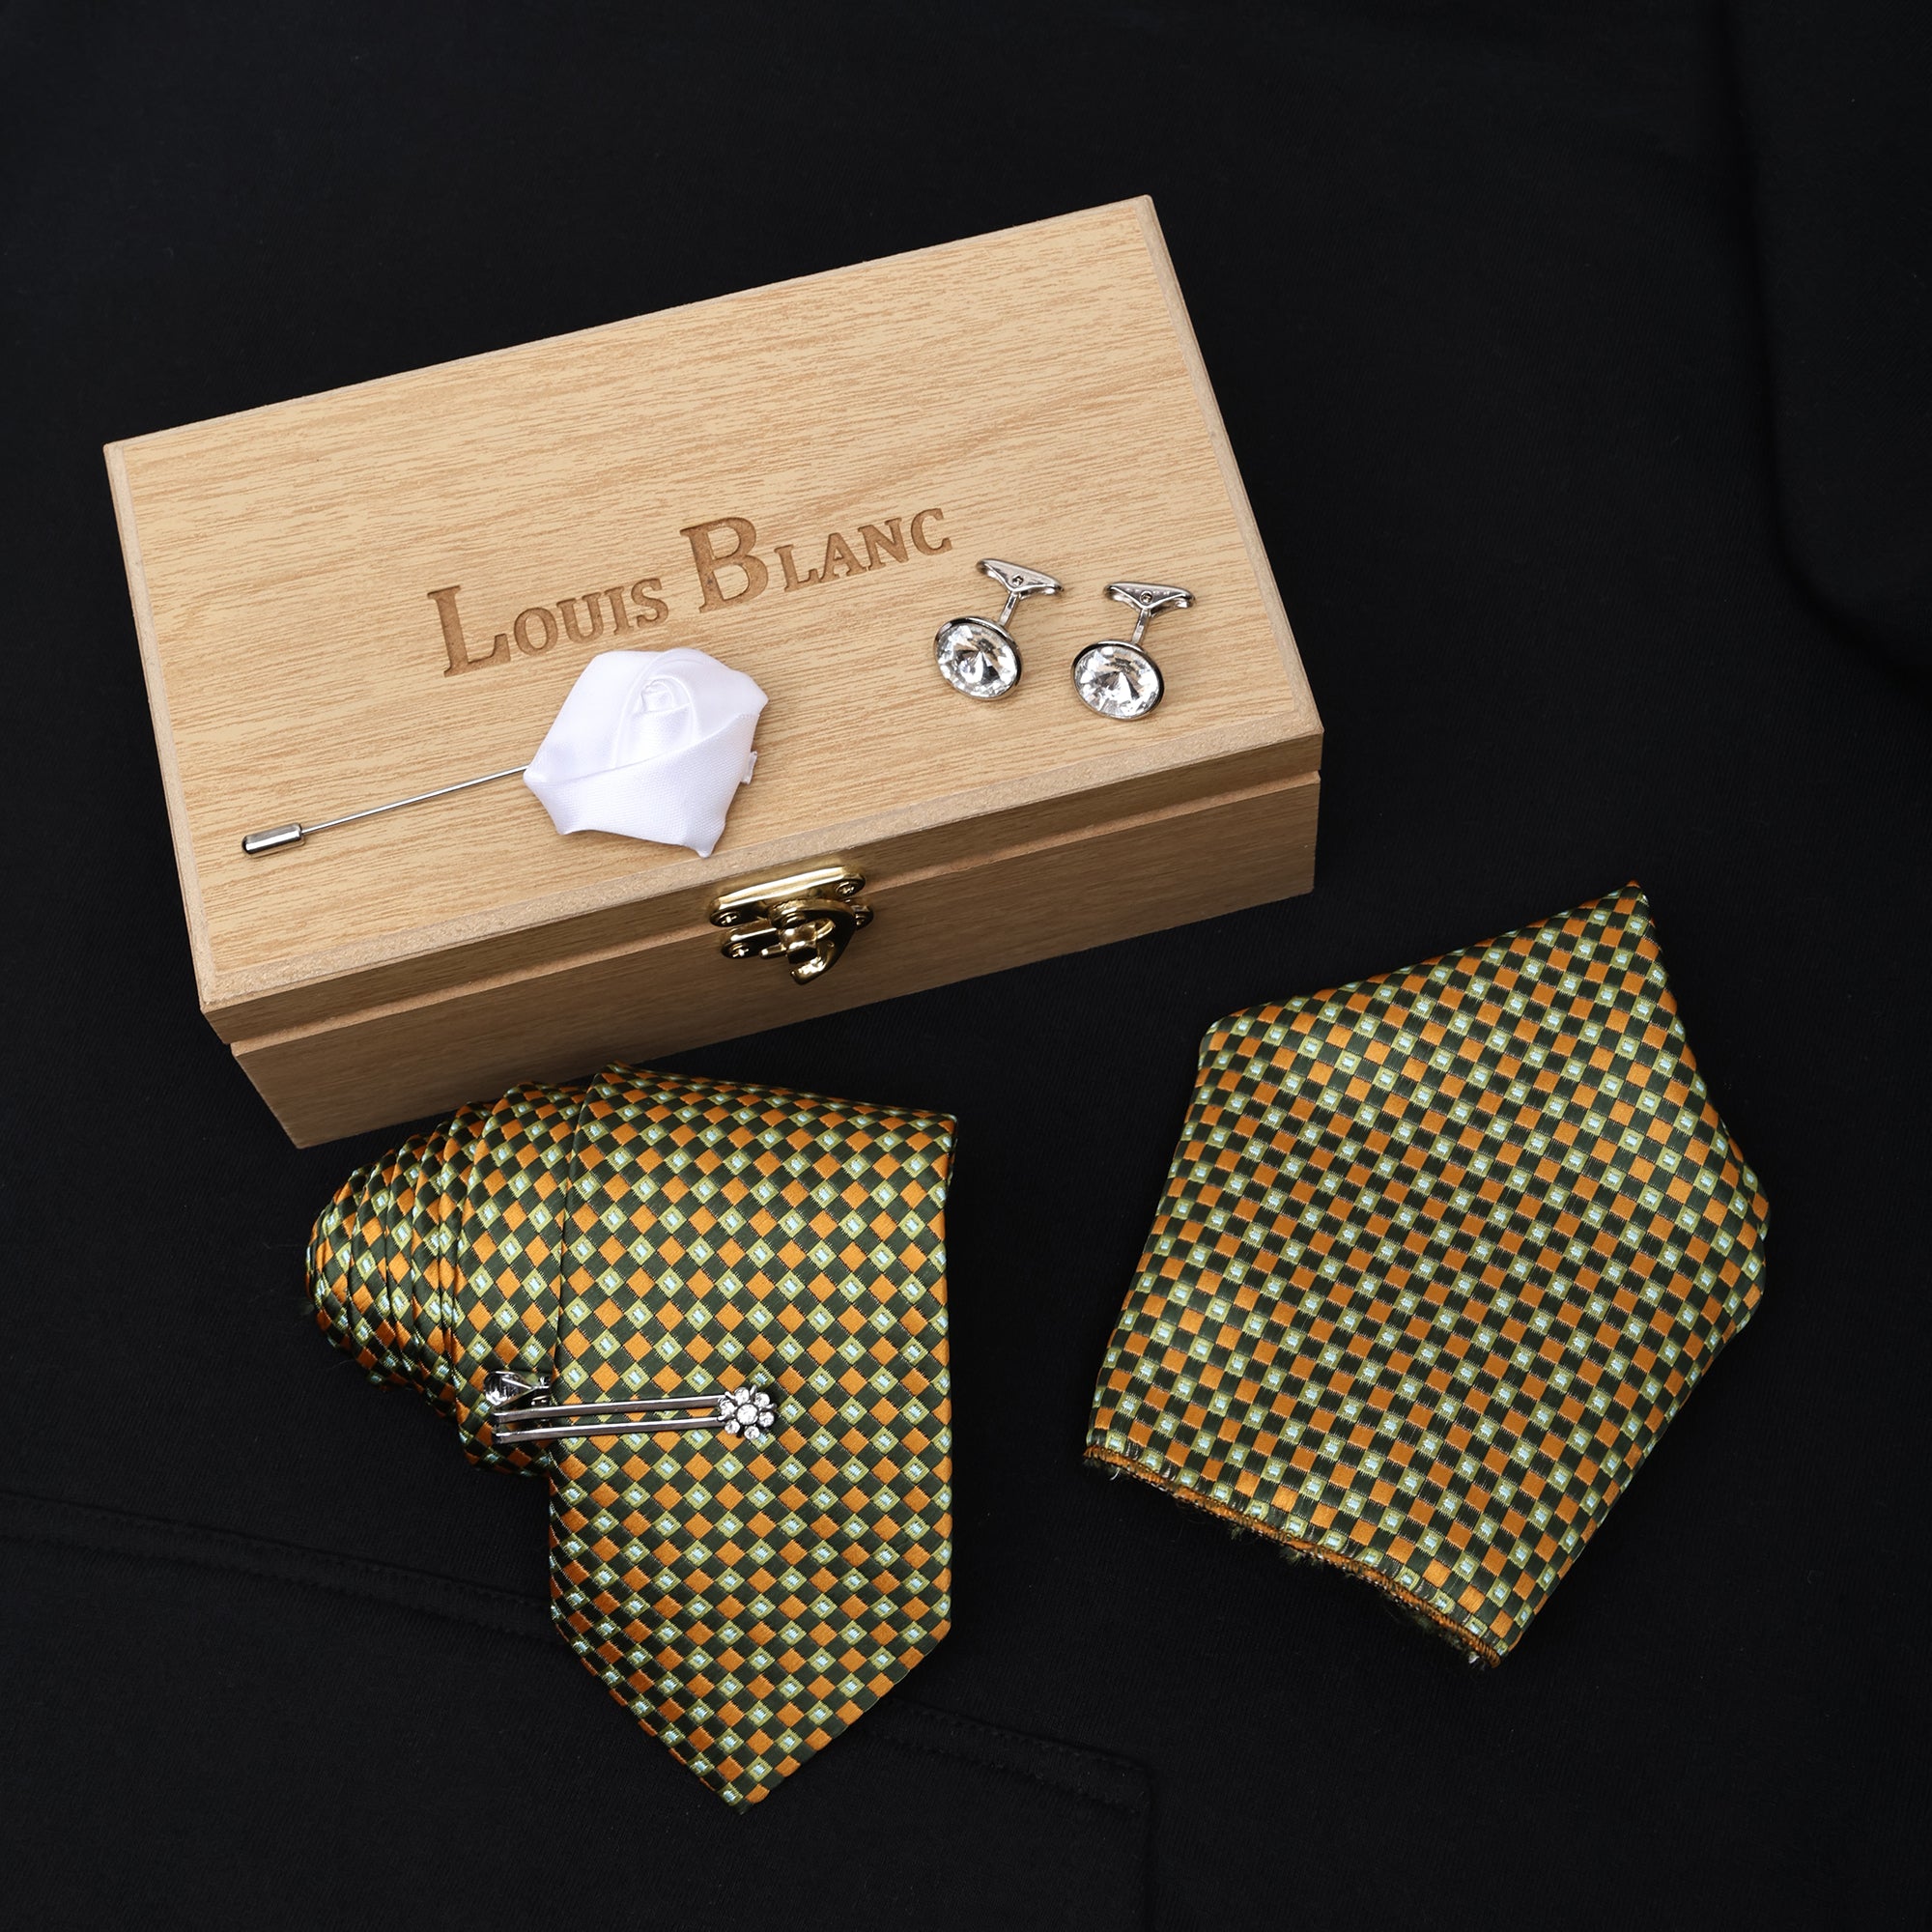 Sheen Green Luxury Italian Silk Neckties Set With Pocket Square Cufflinks Brooch Silver Tiepin